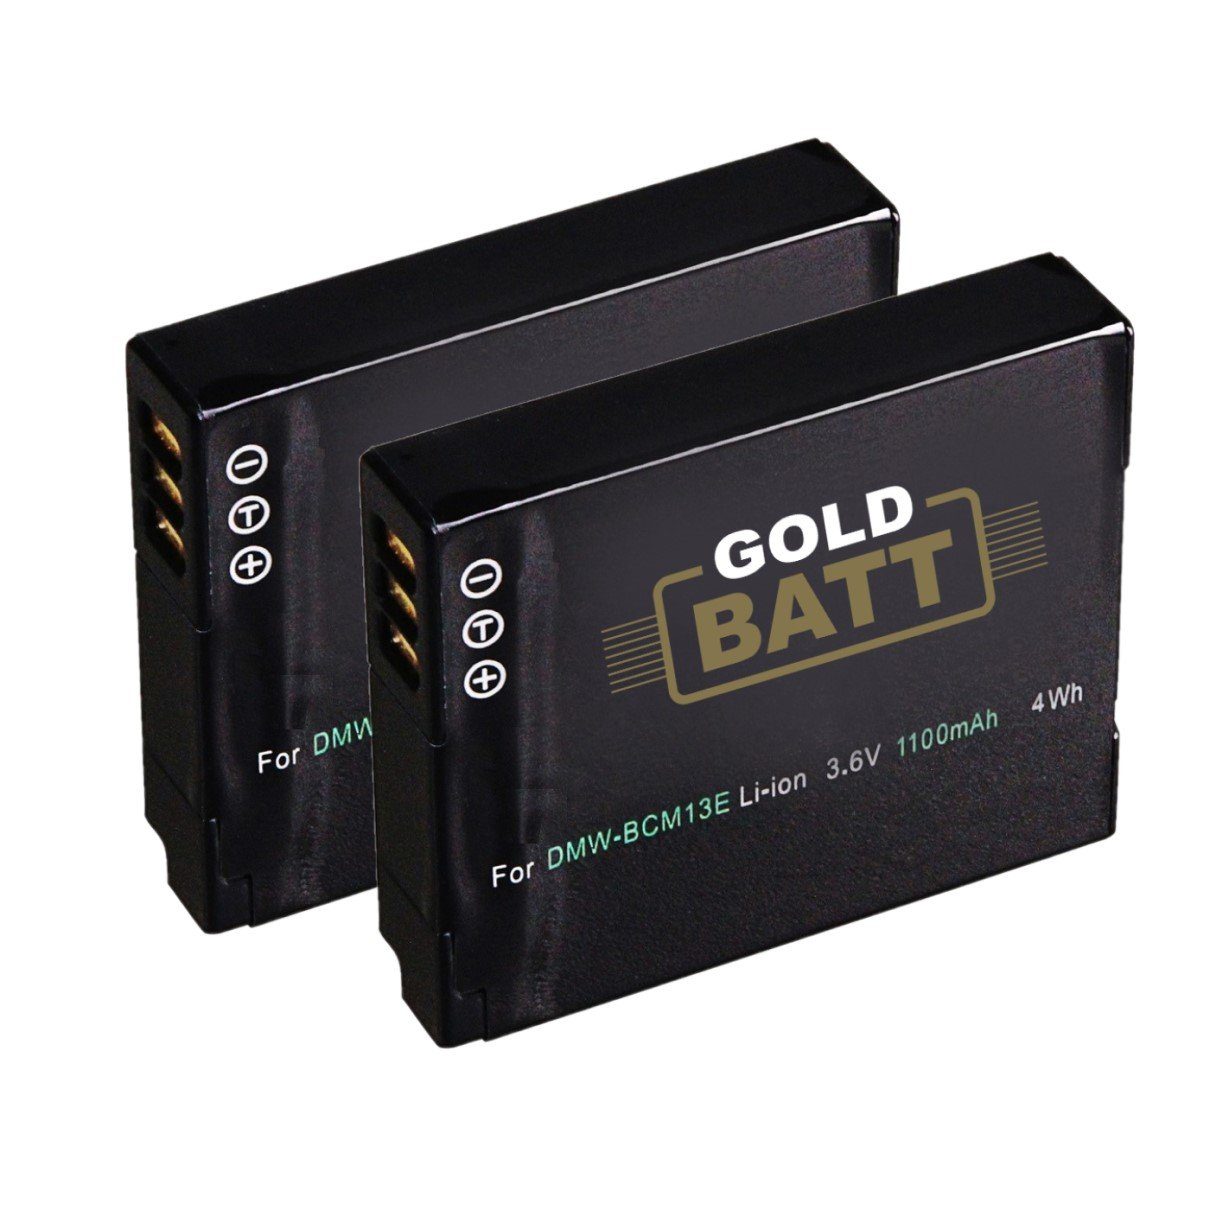 GOLDBATT 2x Akku für Panasonic DMW-BCM13 BCM13 DMC-TZ41 DMC-TS5 DMC-FT5 DMC-TZ40 DMC-ZS30 Kamera-Akku Ersatzakku 1100 mAh (3,6 V, 2 St), 100% kompatibel mit den Original Akkus durch maßgefertigte Passform inklusive Überhitzungsschutz